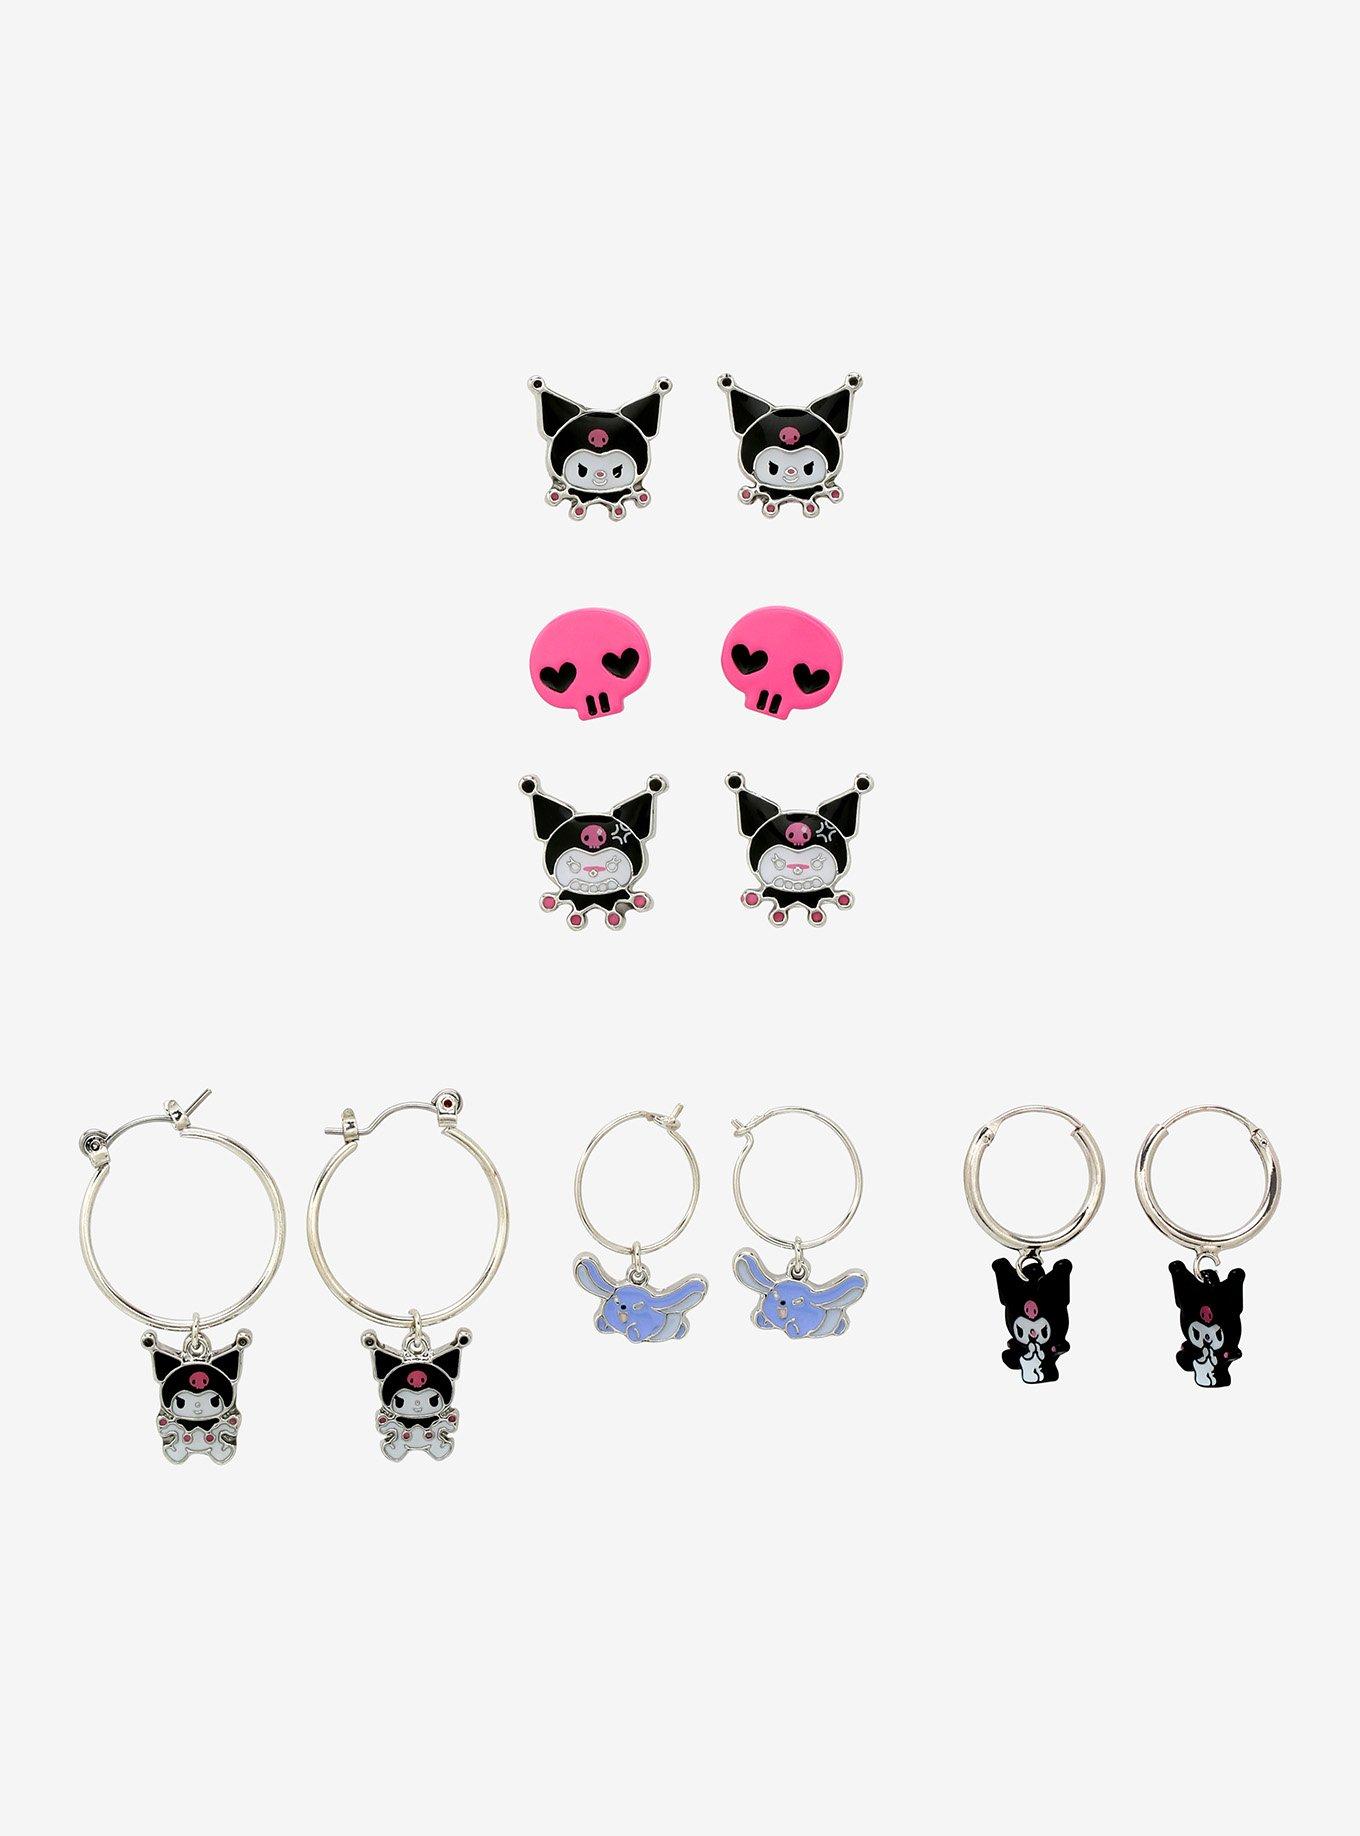 Essential V Hoop Earrings S00 - Fashion Jewelry